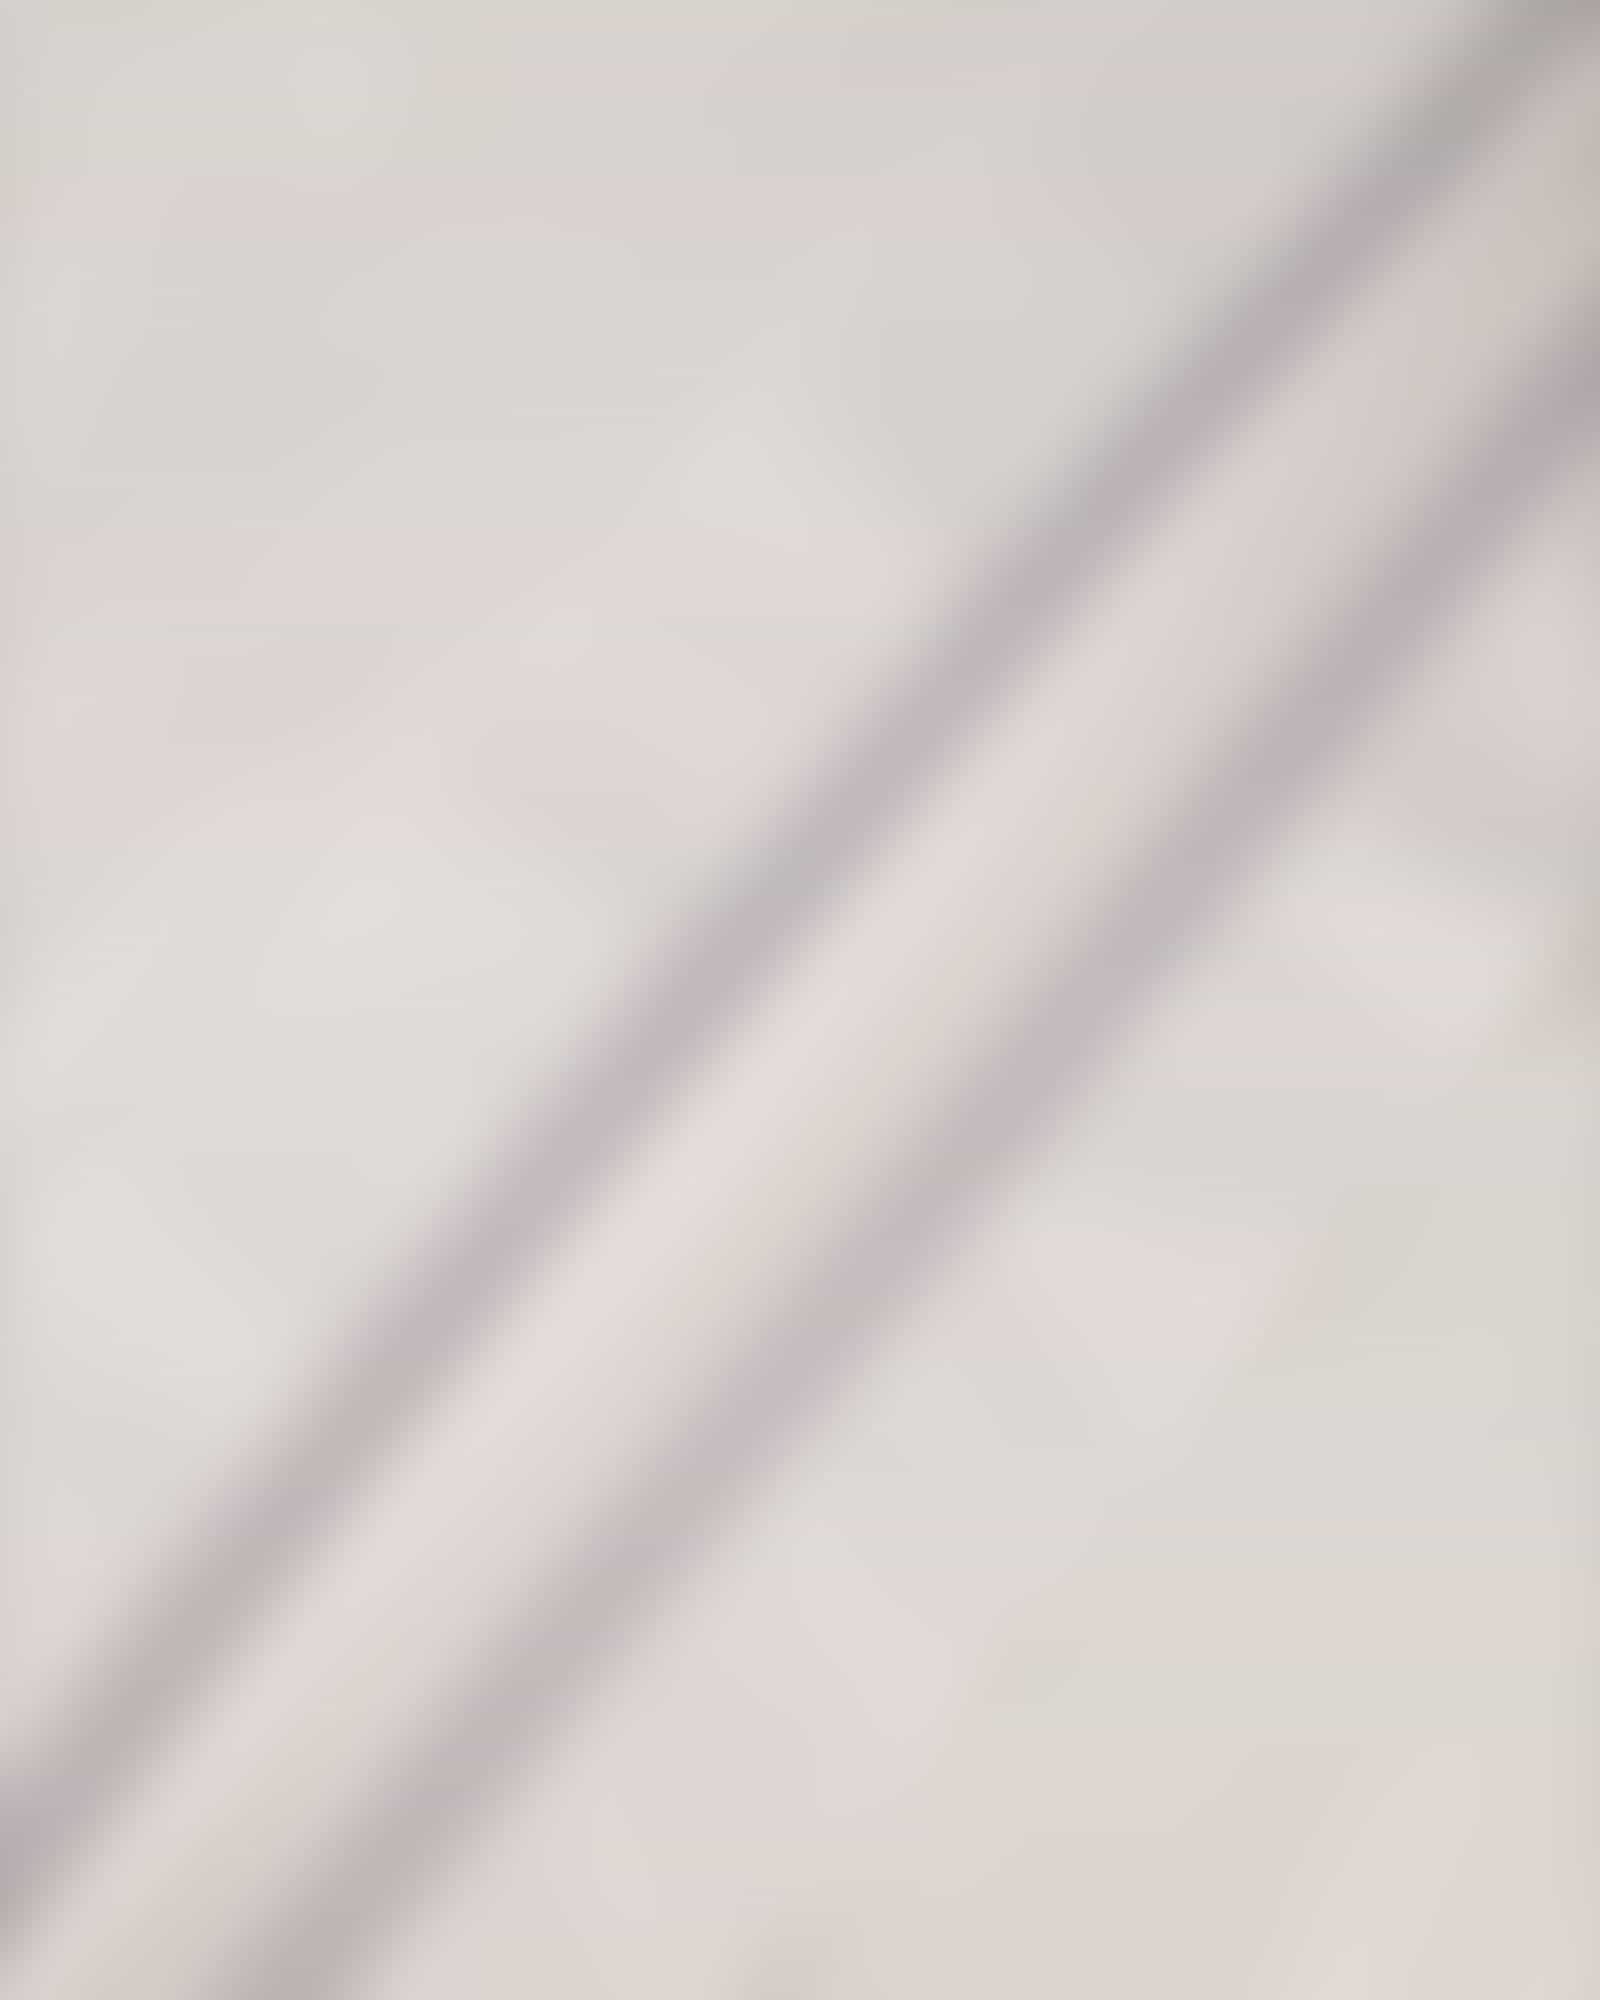 JOOP Herren Bademantel Kimono Pique 1656 - Farbe: Weiß - 600 - XL Detailbild 1